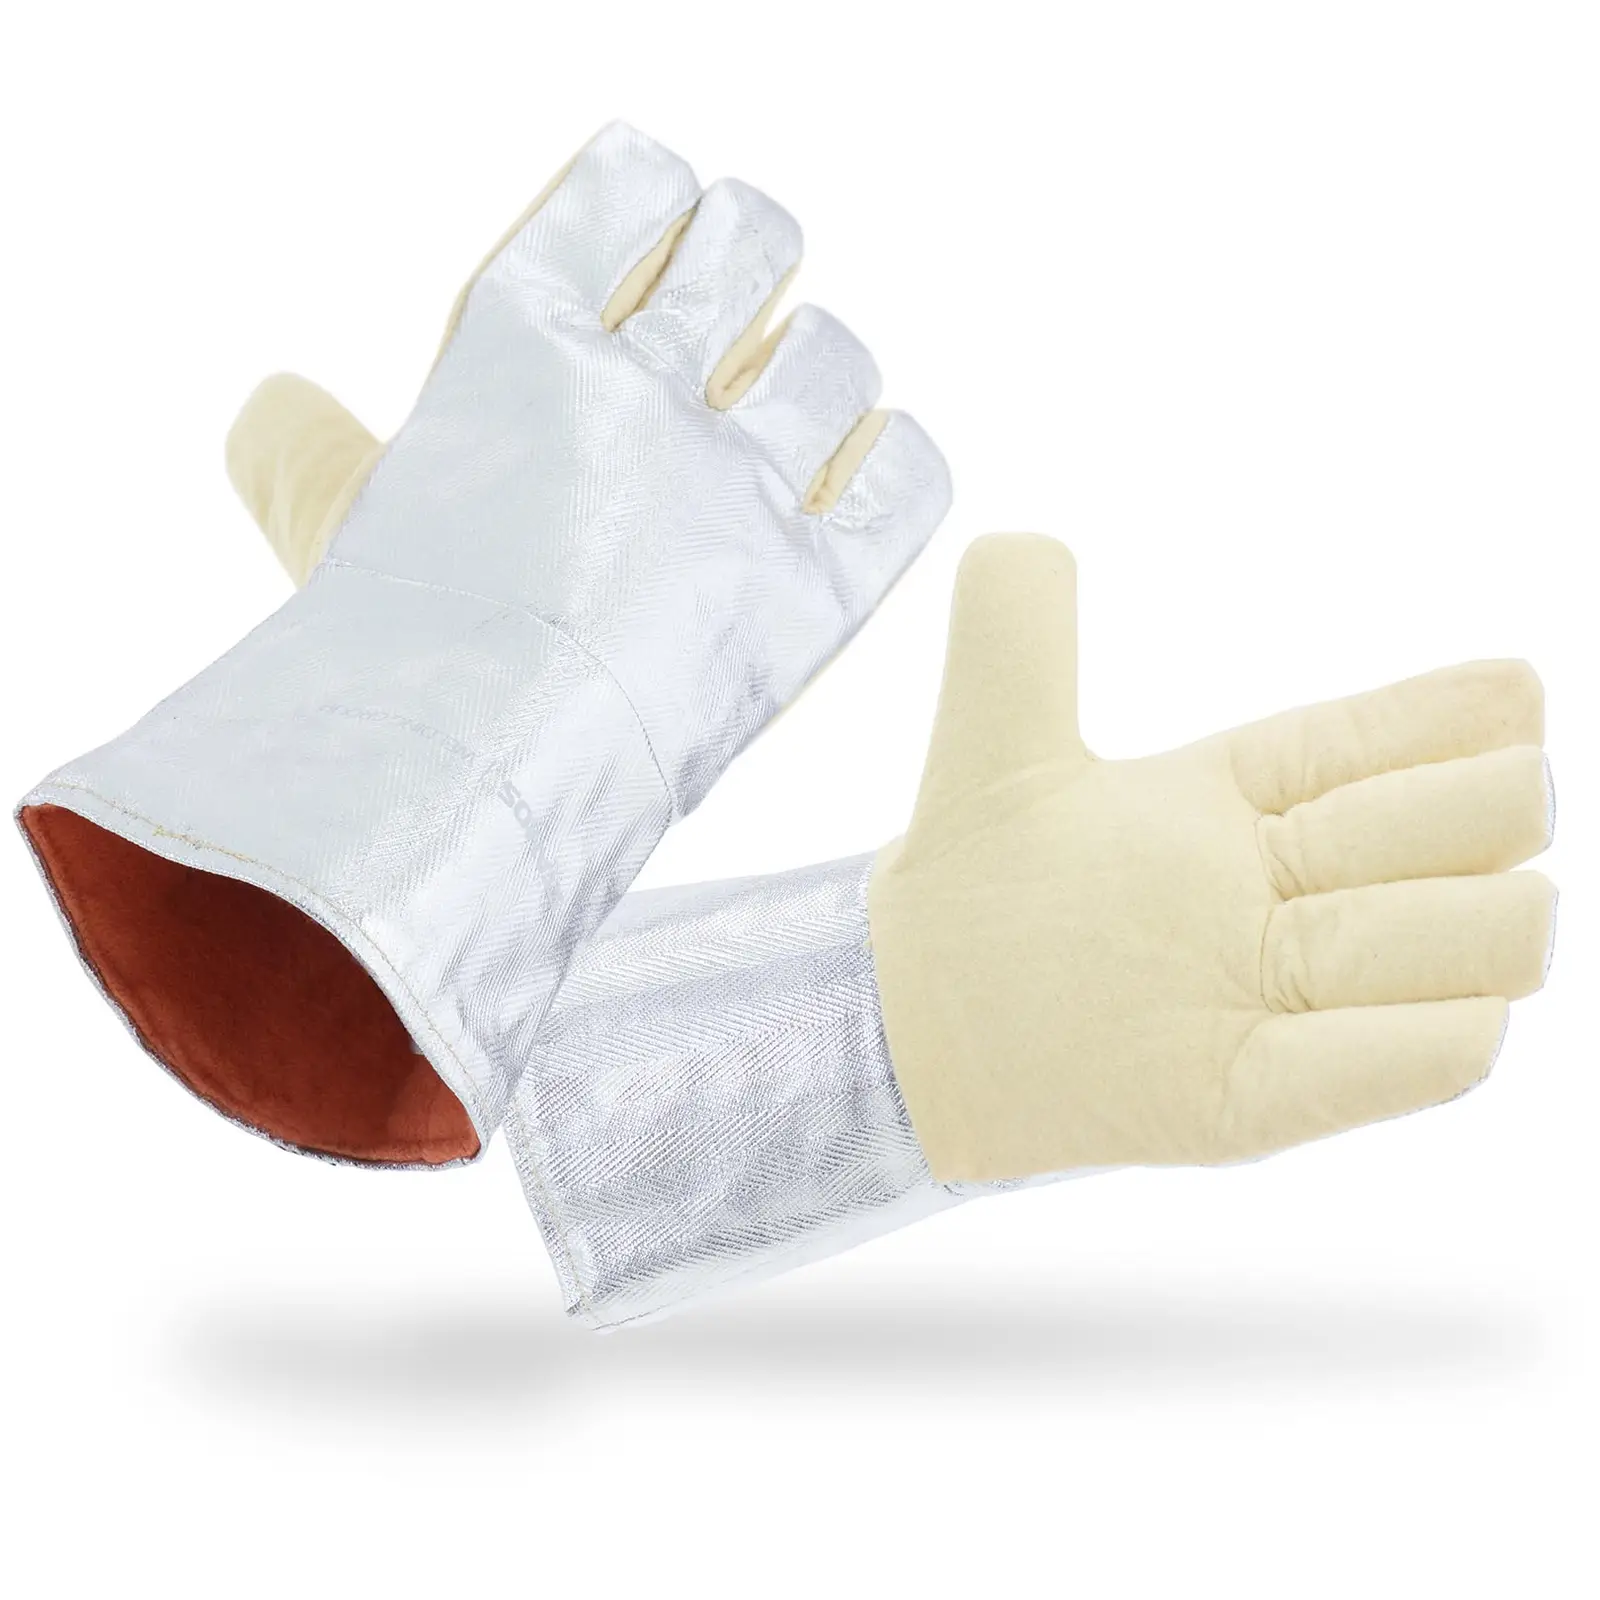 Welding Gloves - 35 x 20 cm - aramid fibre - 35 cm long